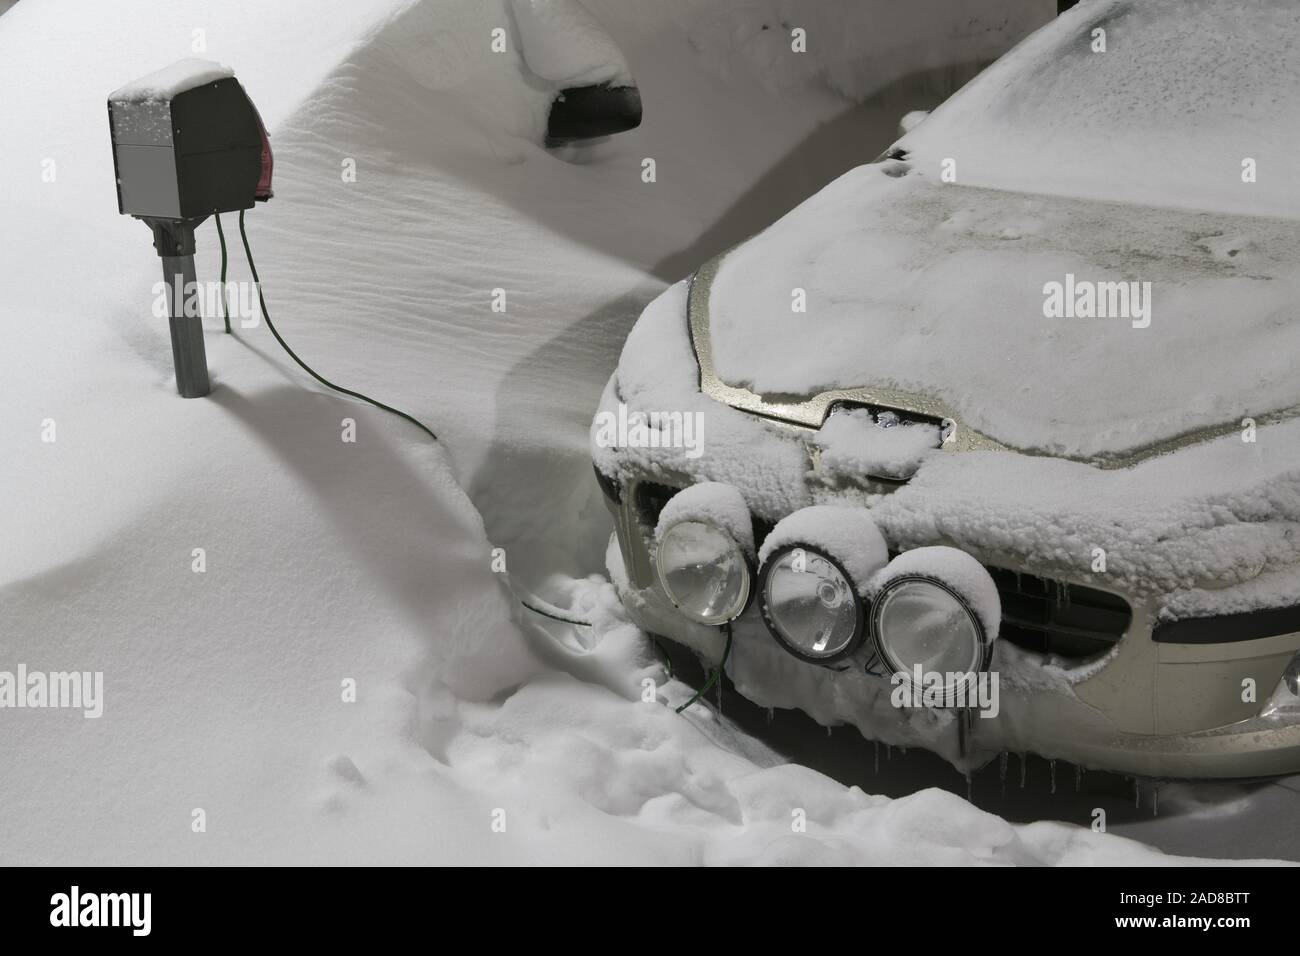 Coperta di neve auto, Gellivare, Lapponia, Svezia Foto Stock